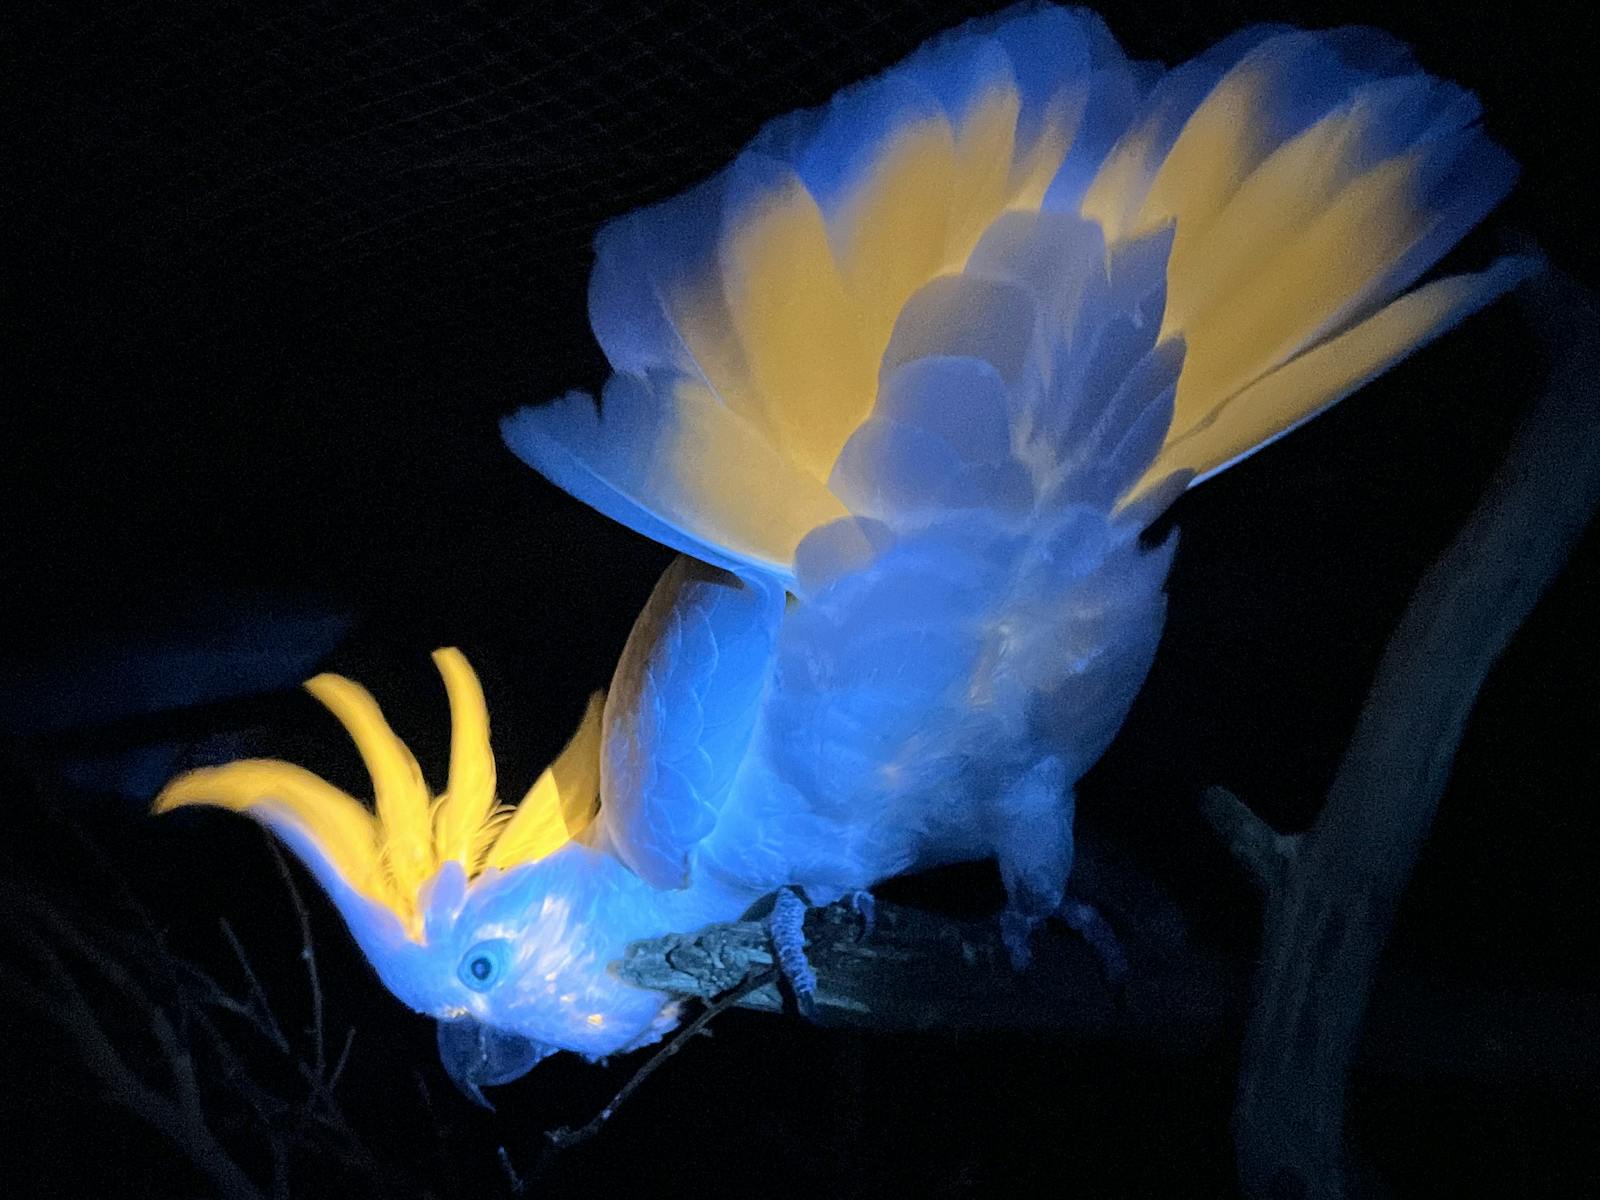 Cockatoo, at night, glowing brightly under UV light